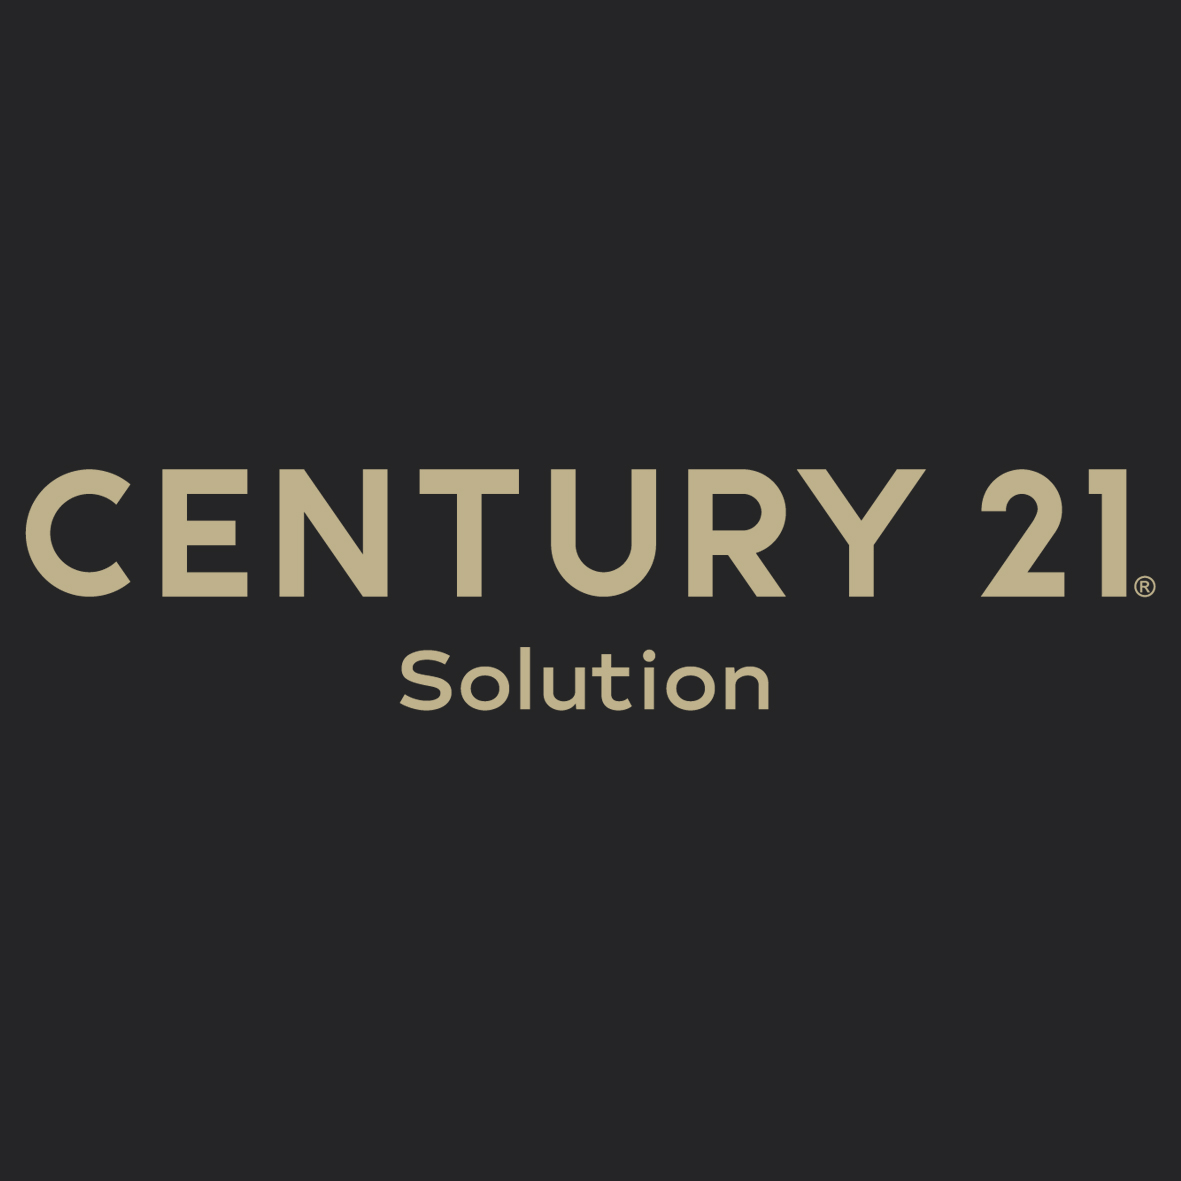 CENTURY 21 Solution